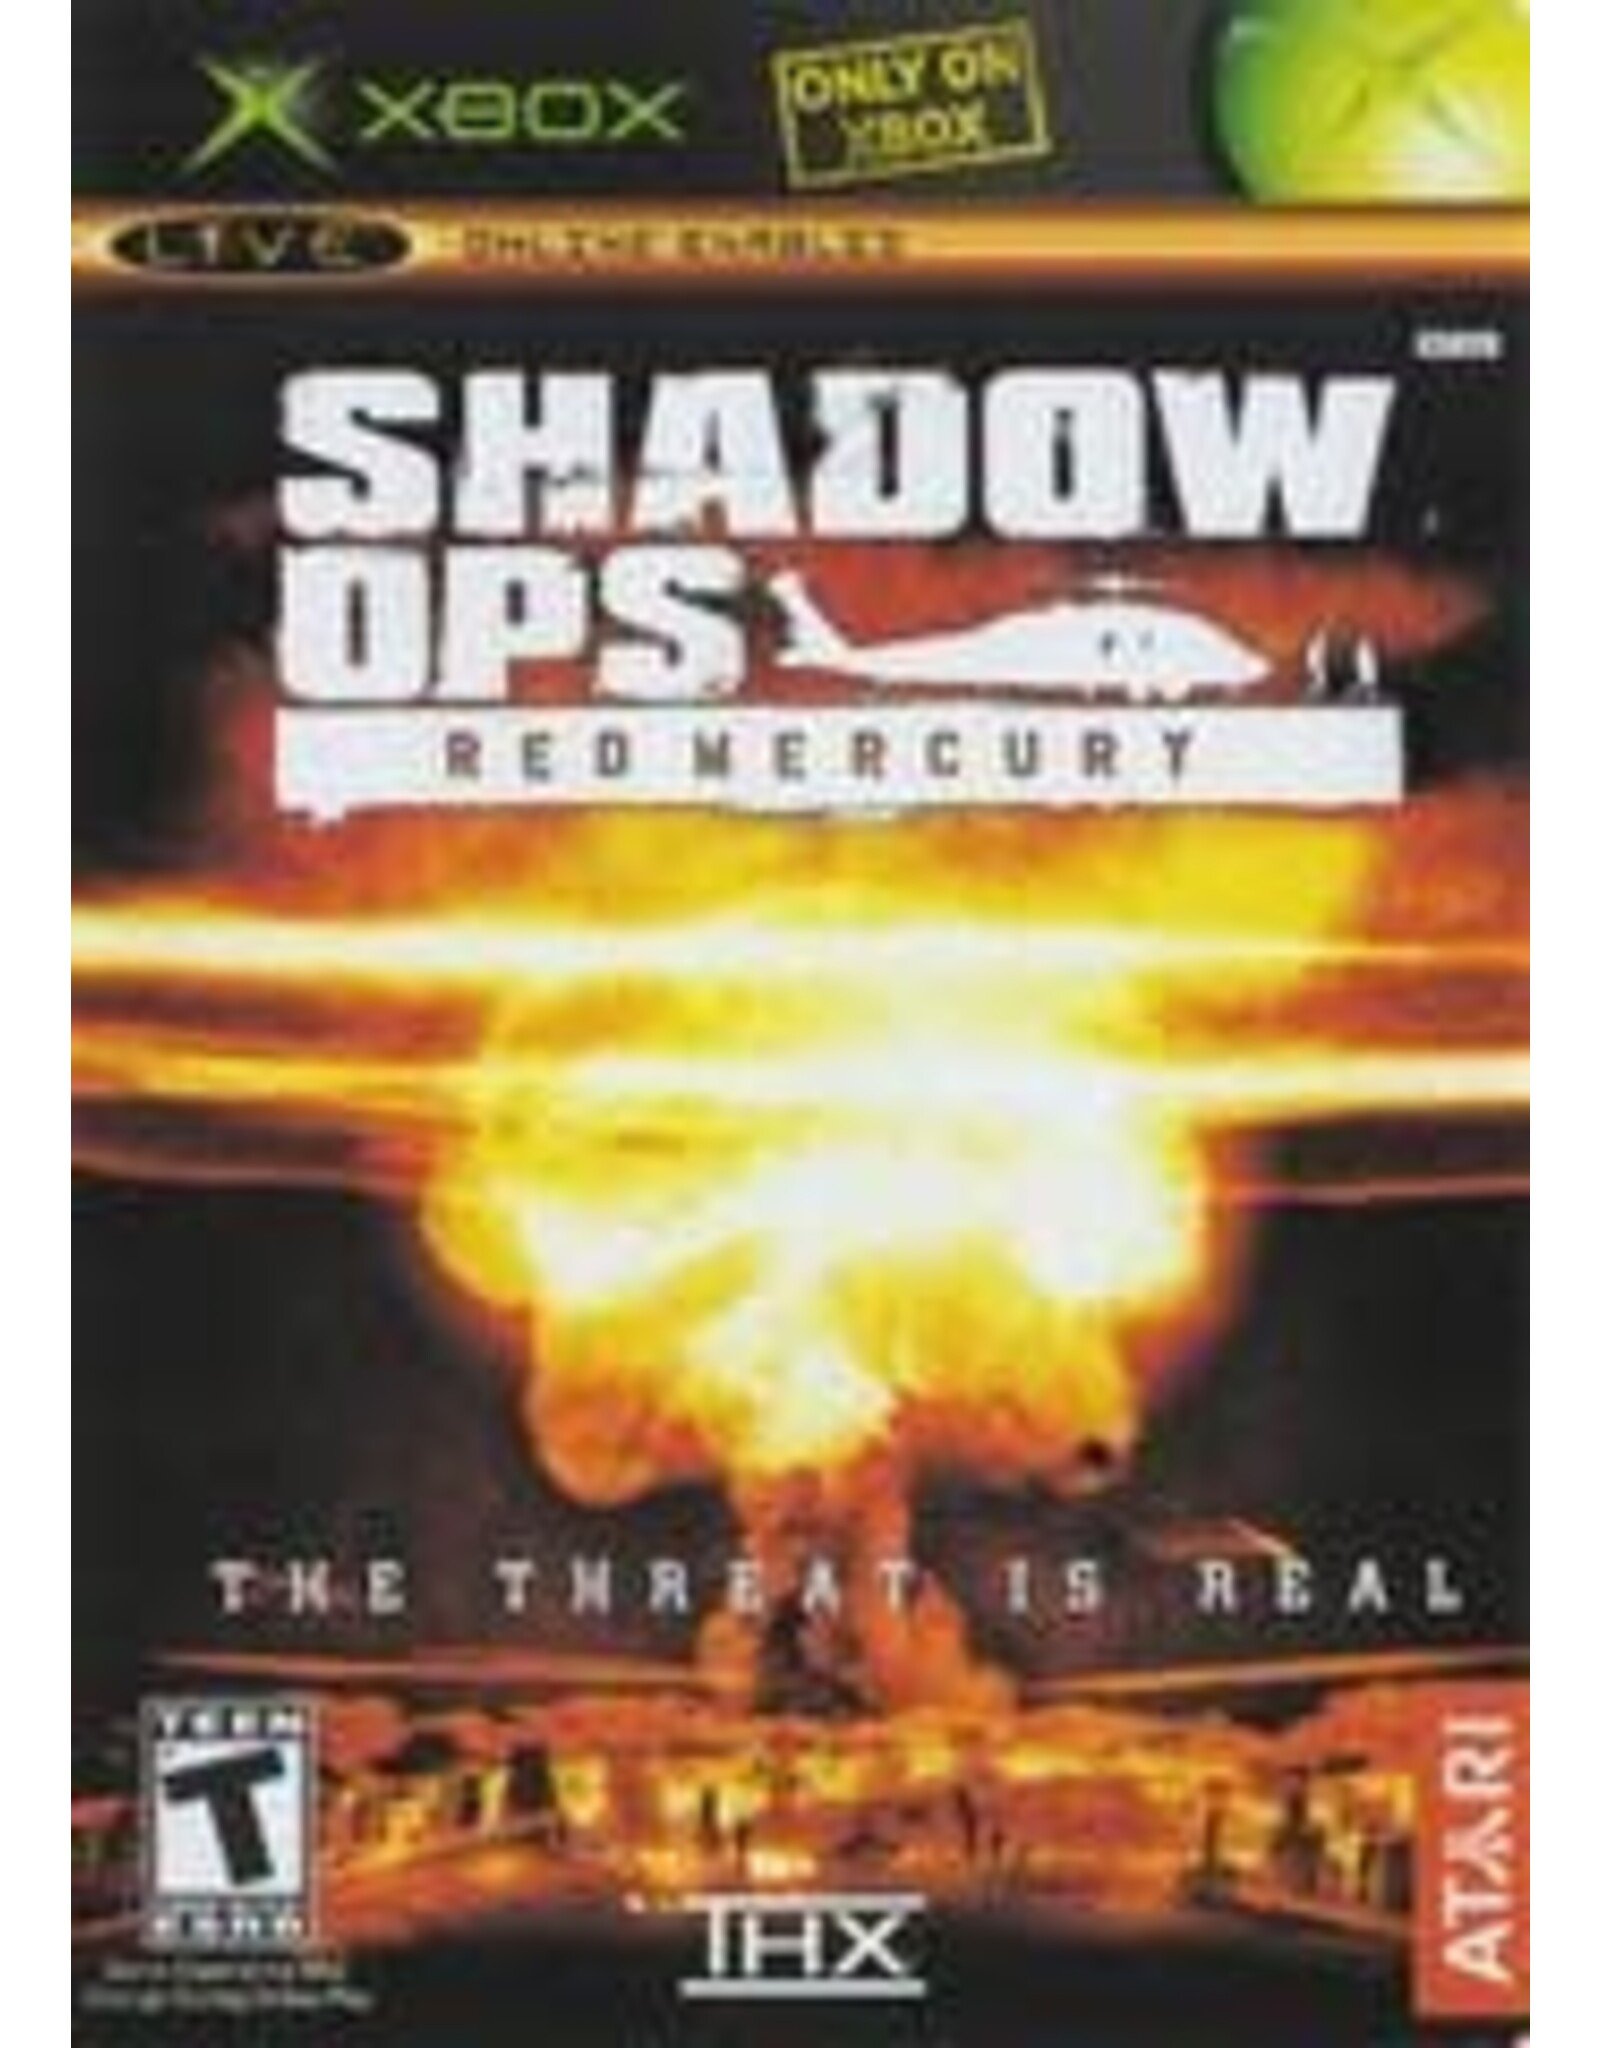 Xbox Shadow Ops Red Mercury (No Manual)